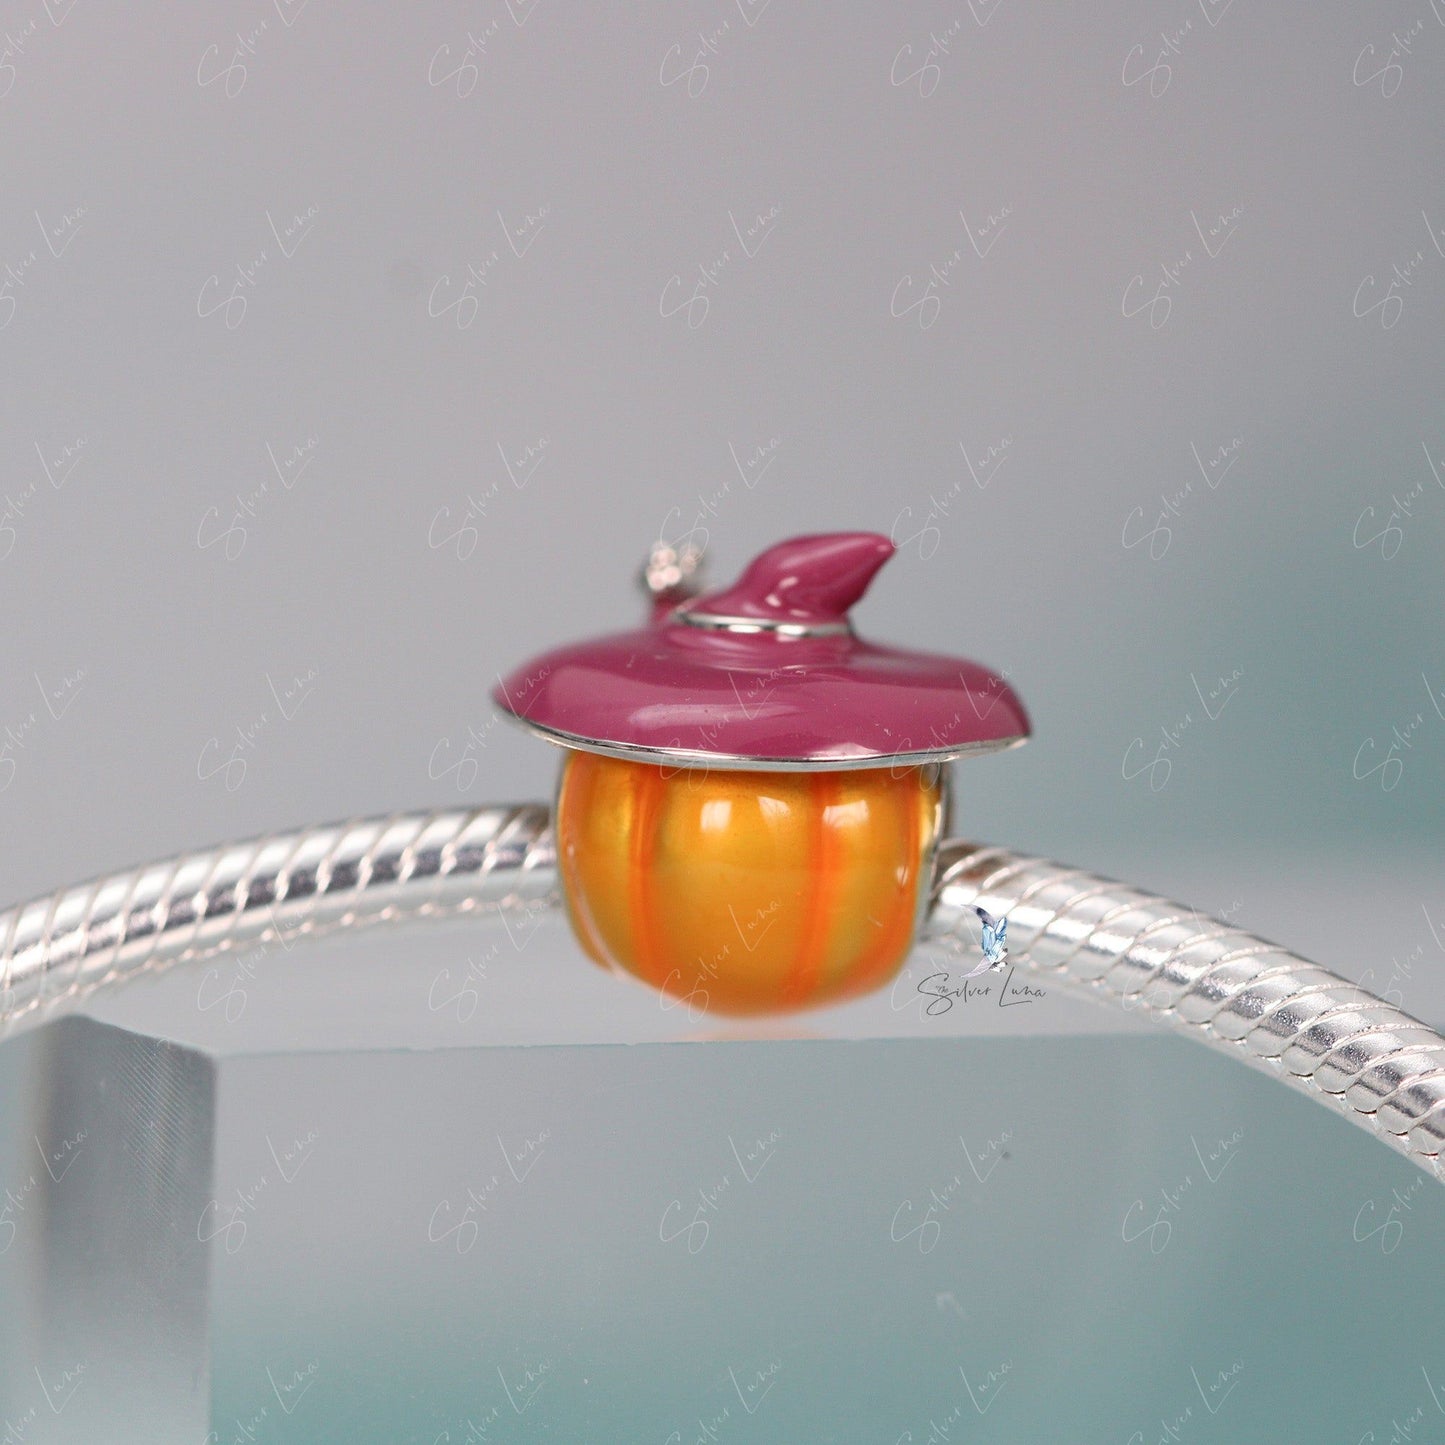 Jack-o-lantern bead charm